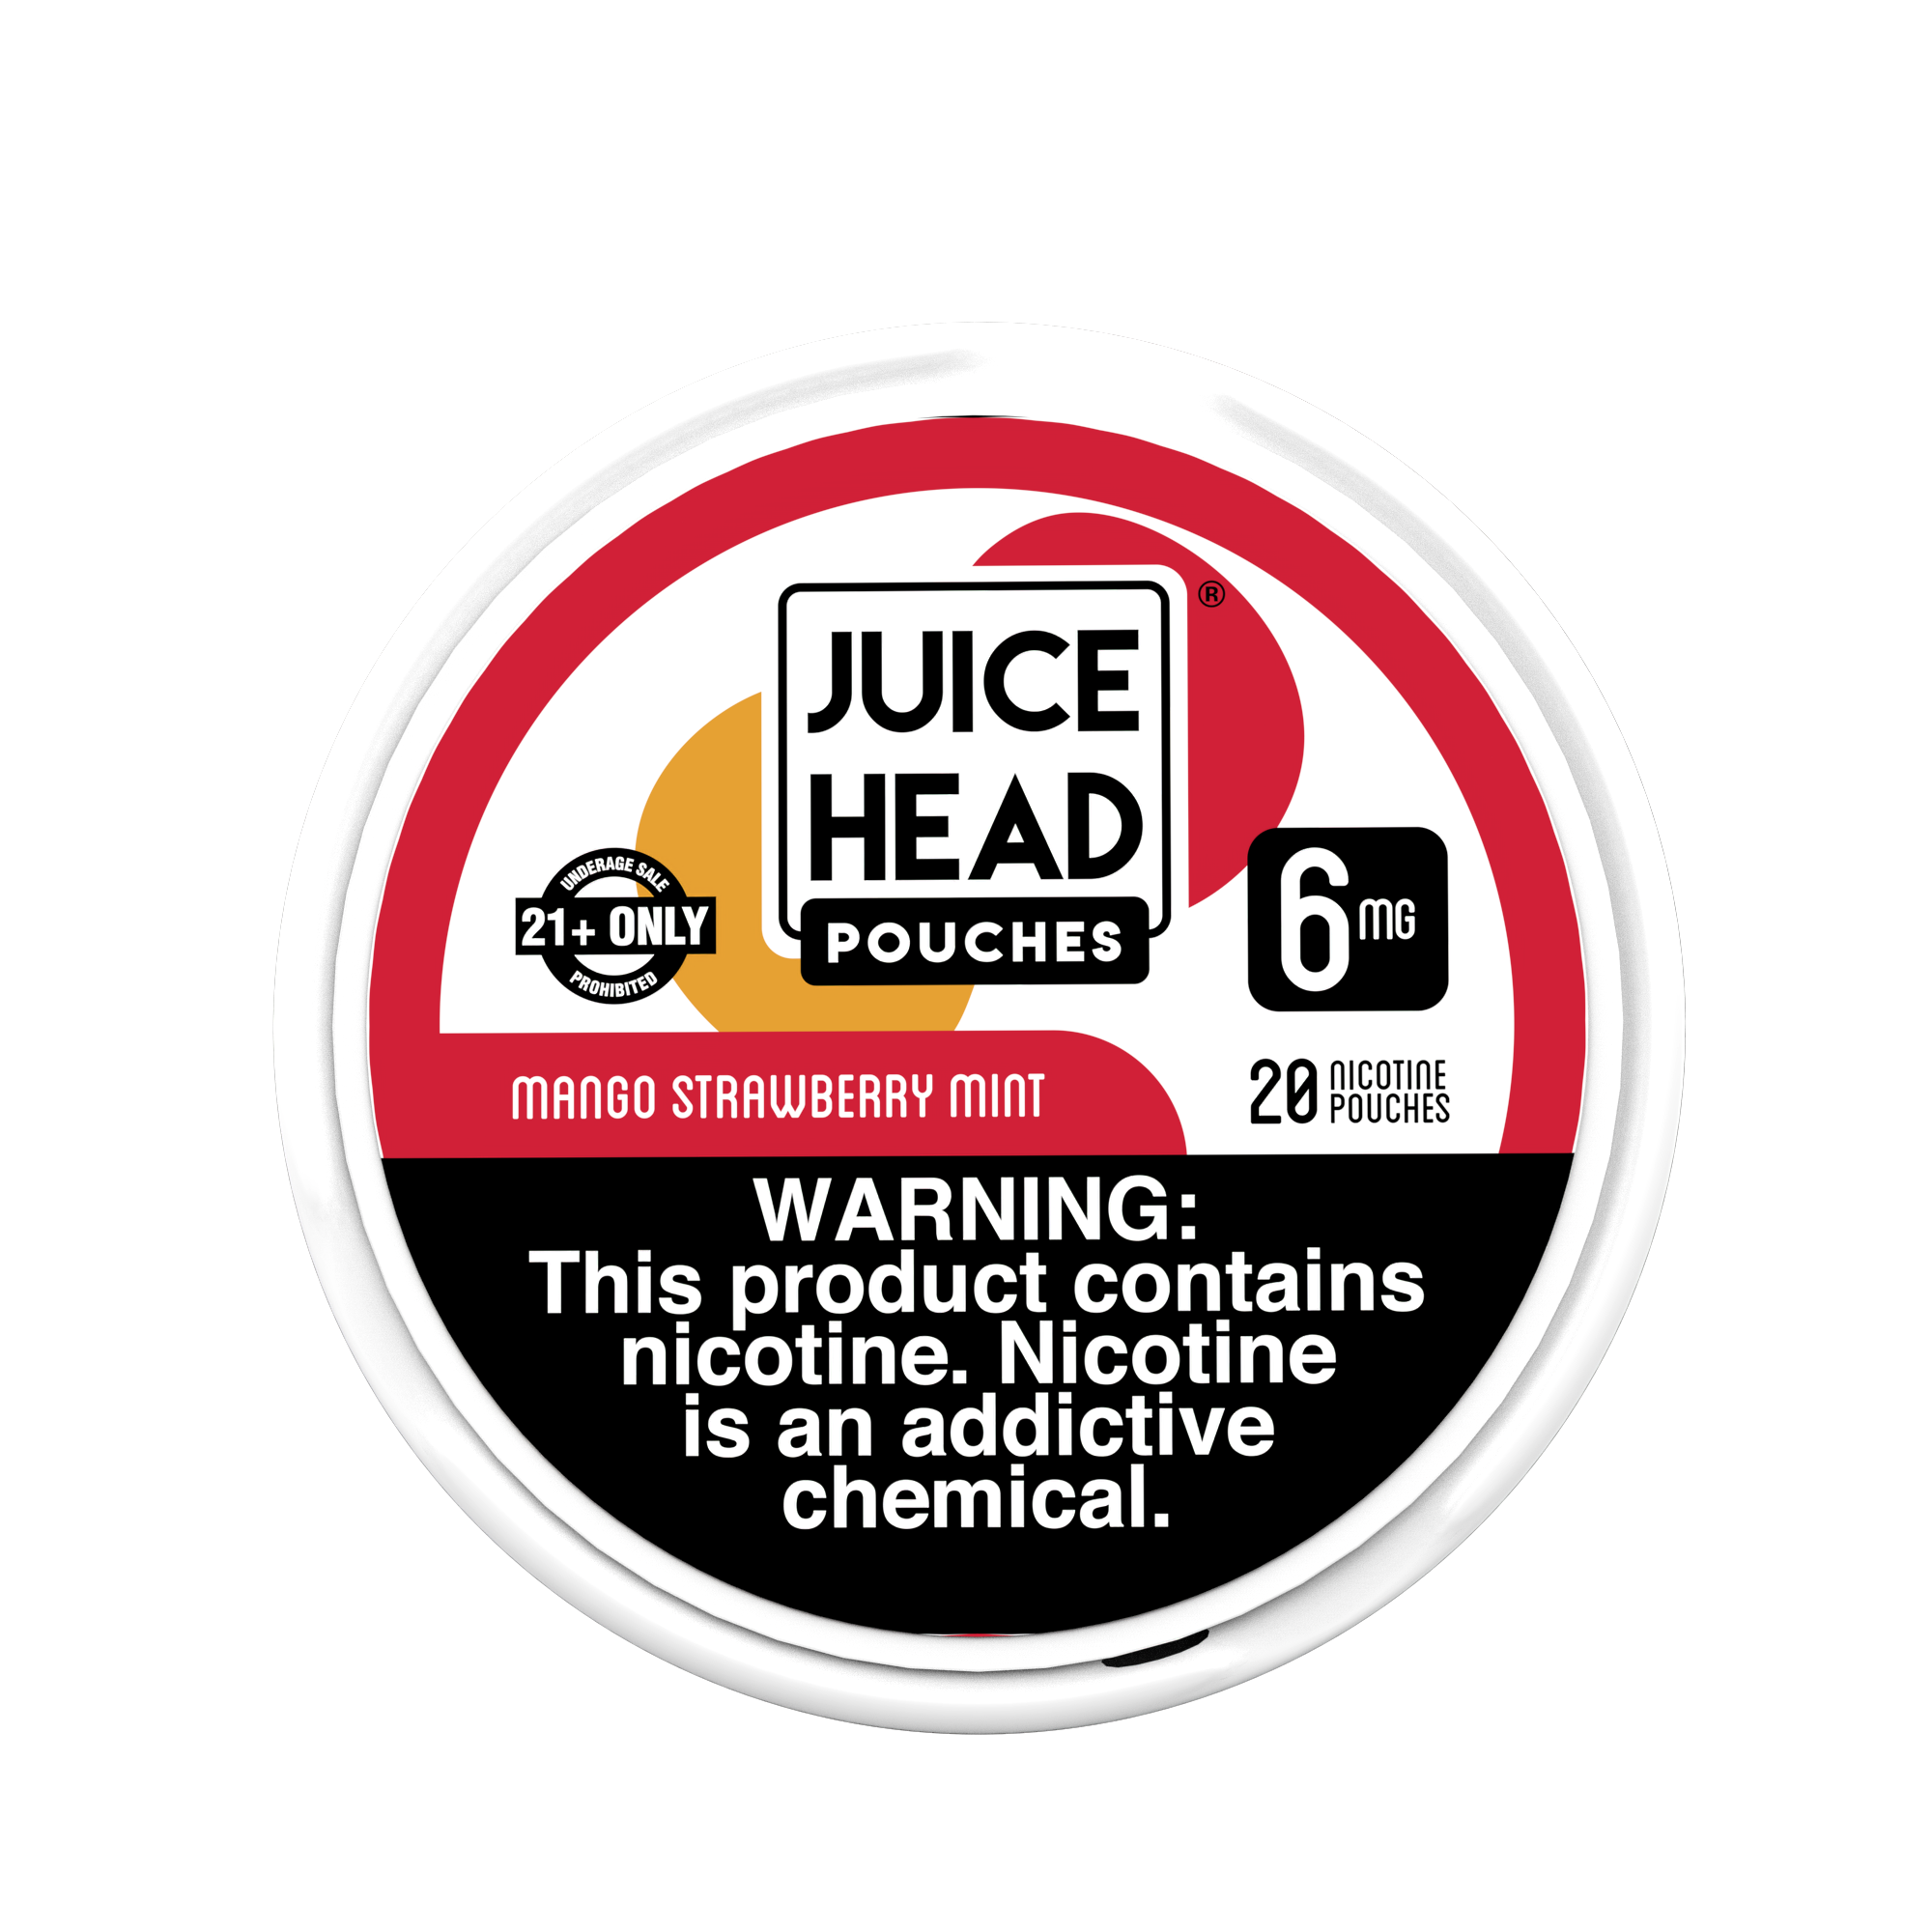 JUICE HEAD POUCHES - Mango Strawberry Mint